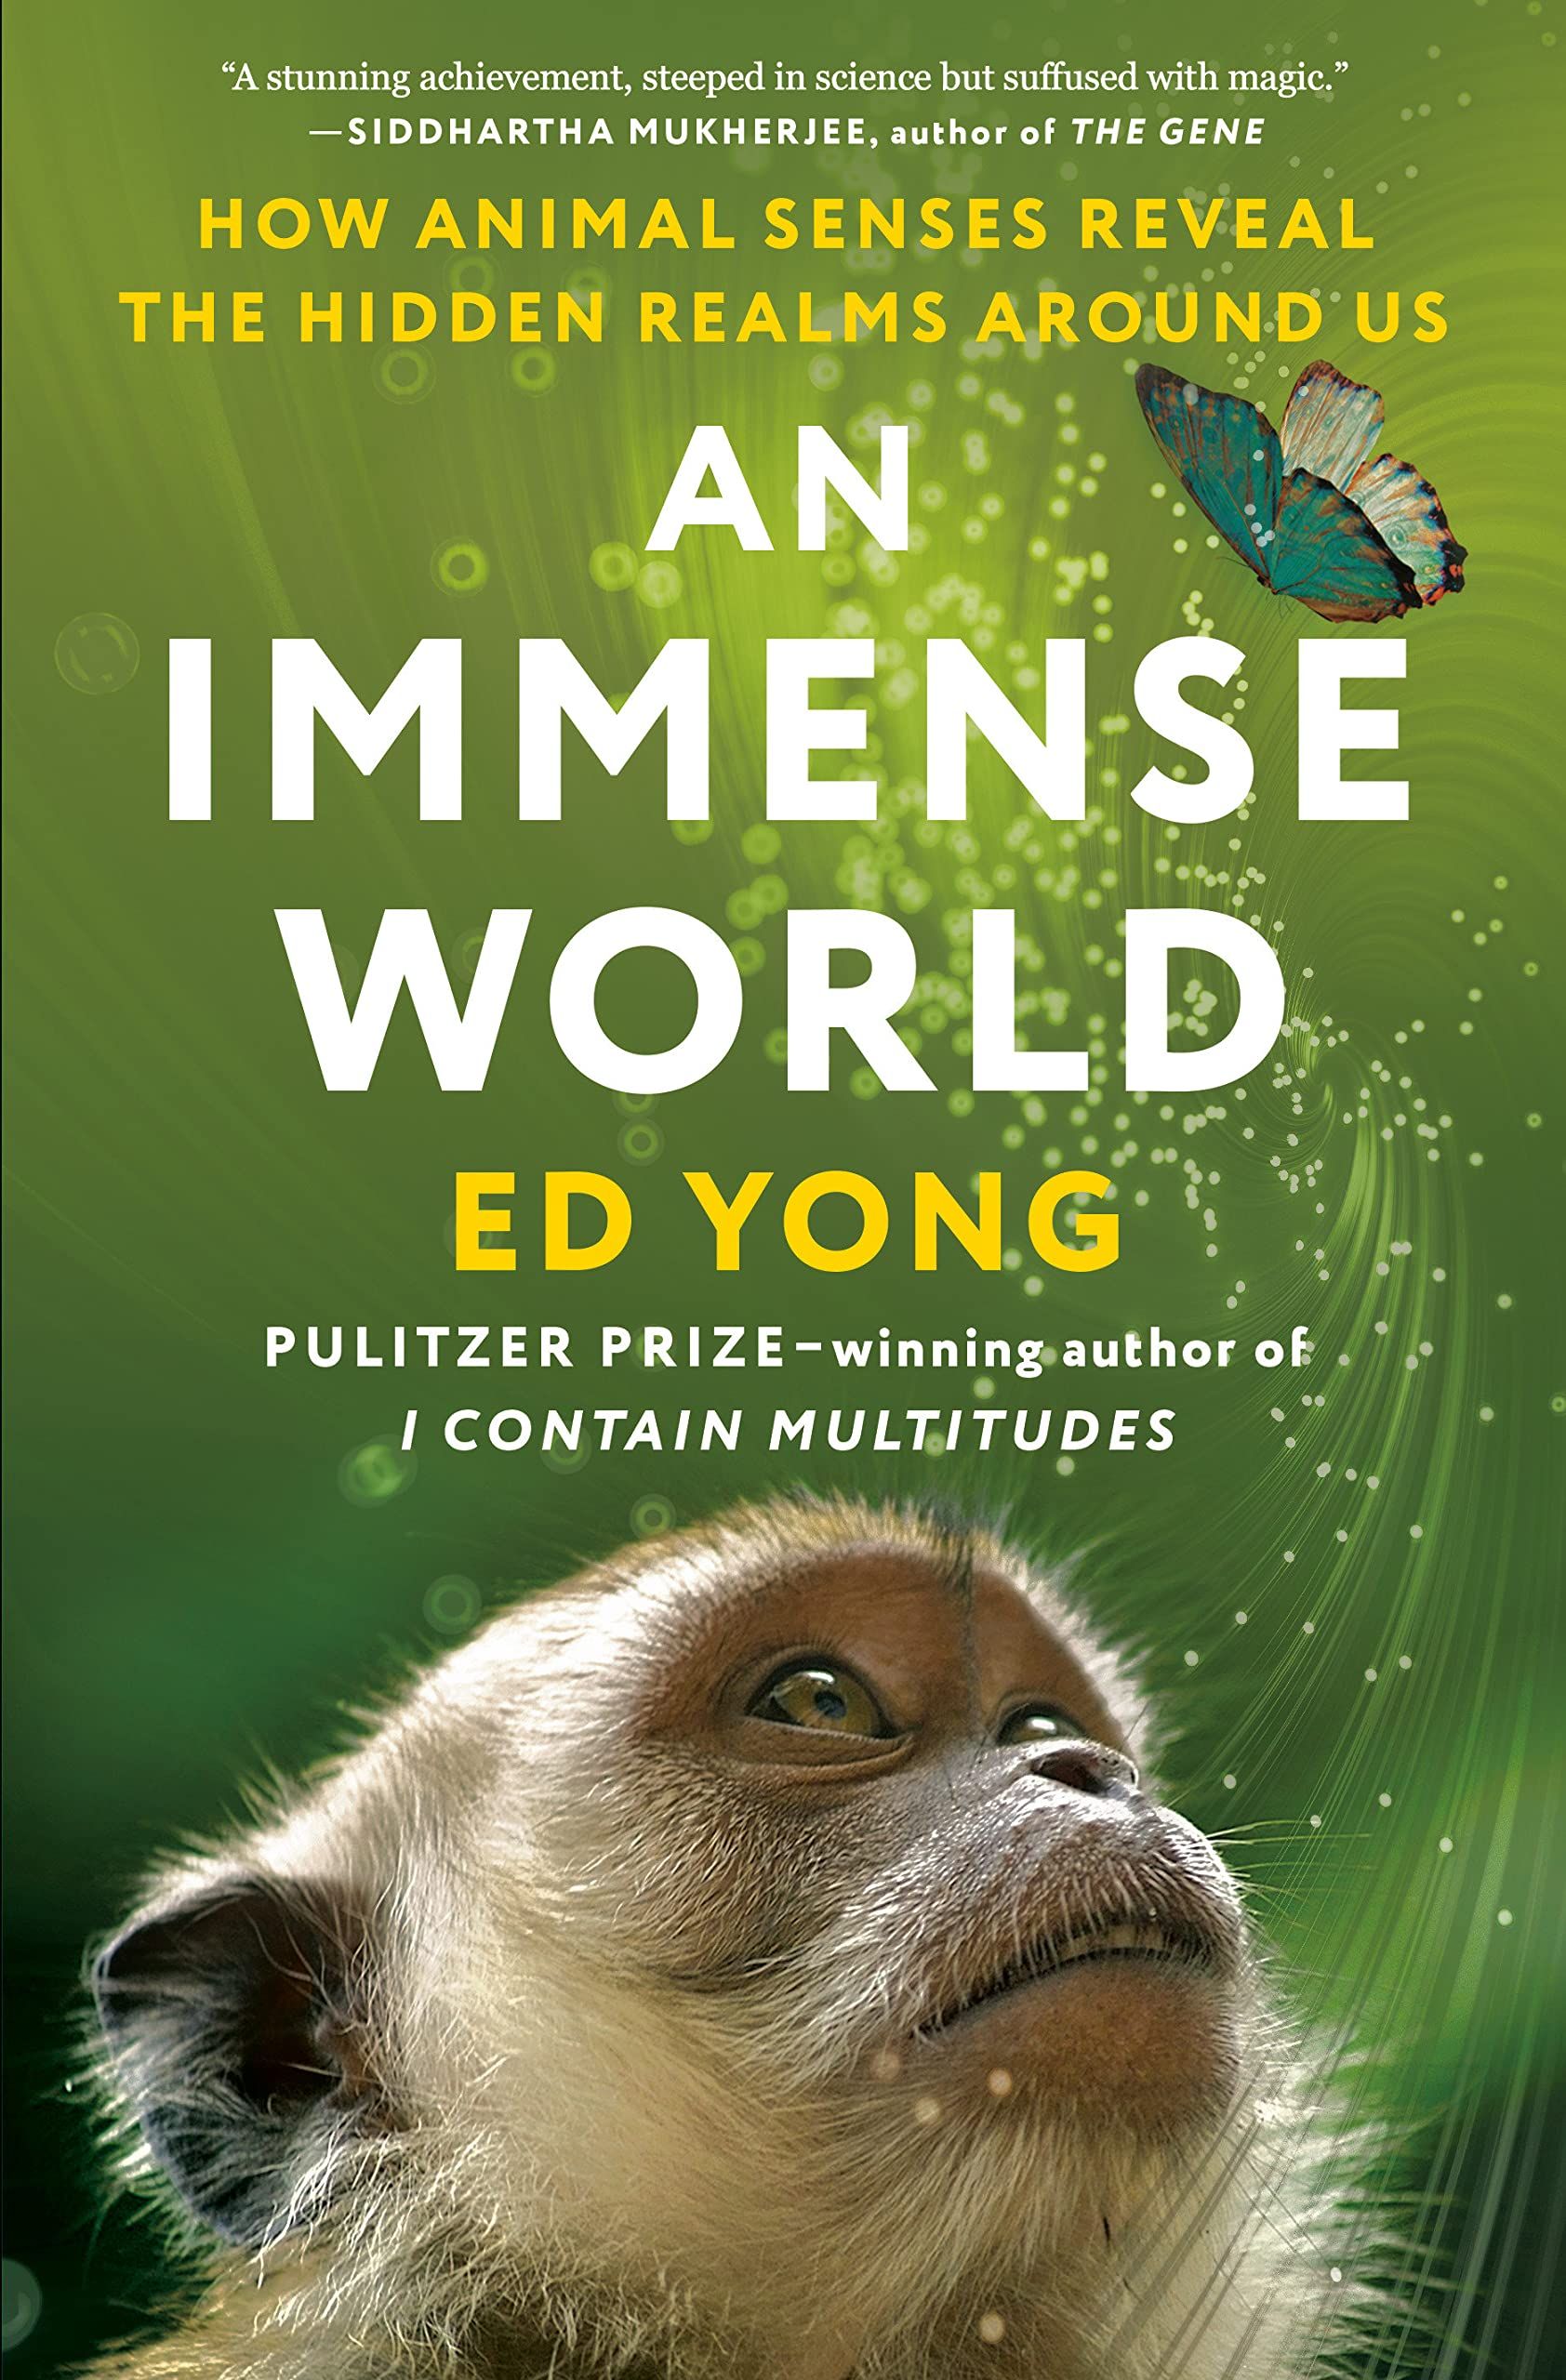 Ed Yong tarafından yazılan An Immense World'ün kapağı